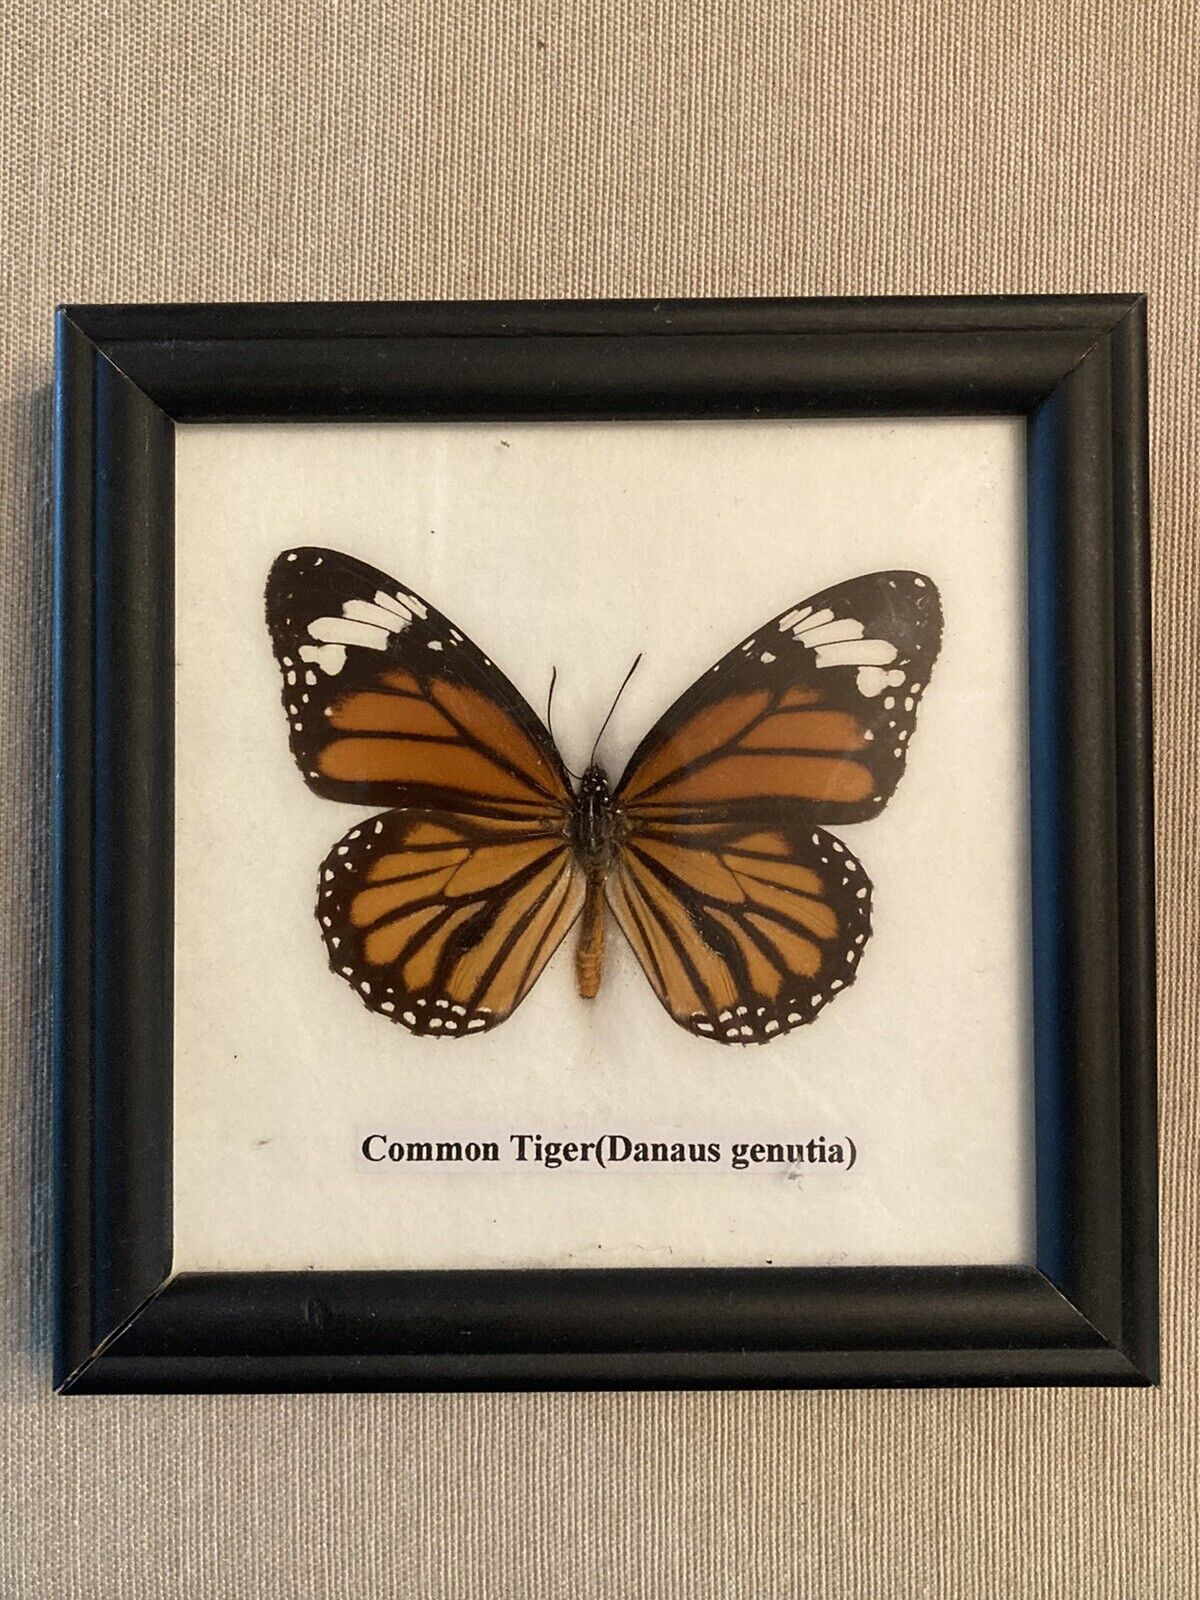 Brown Black White Butterfly ‘Common Tiger’ Danaus genutia Art Framed Taxidermy